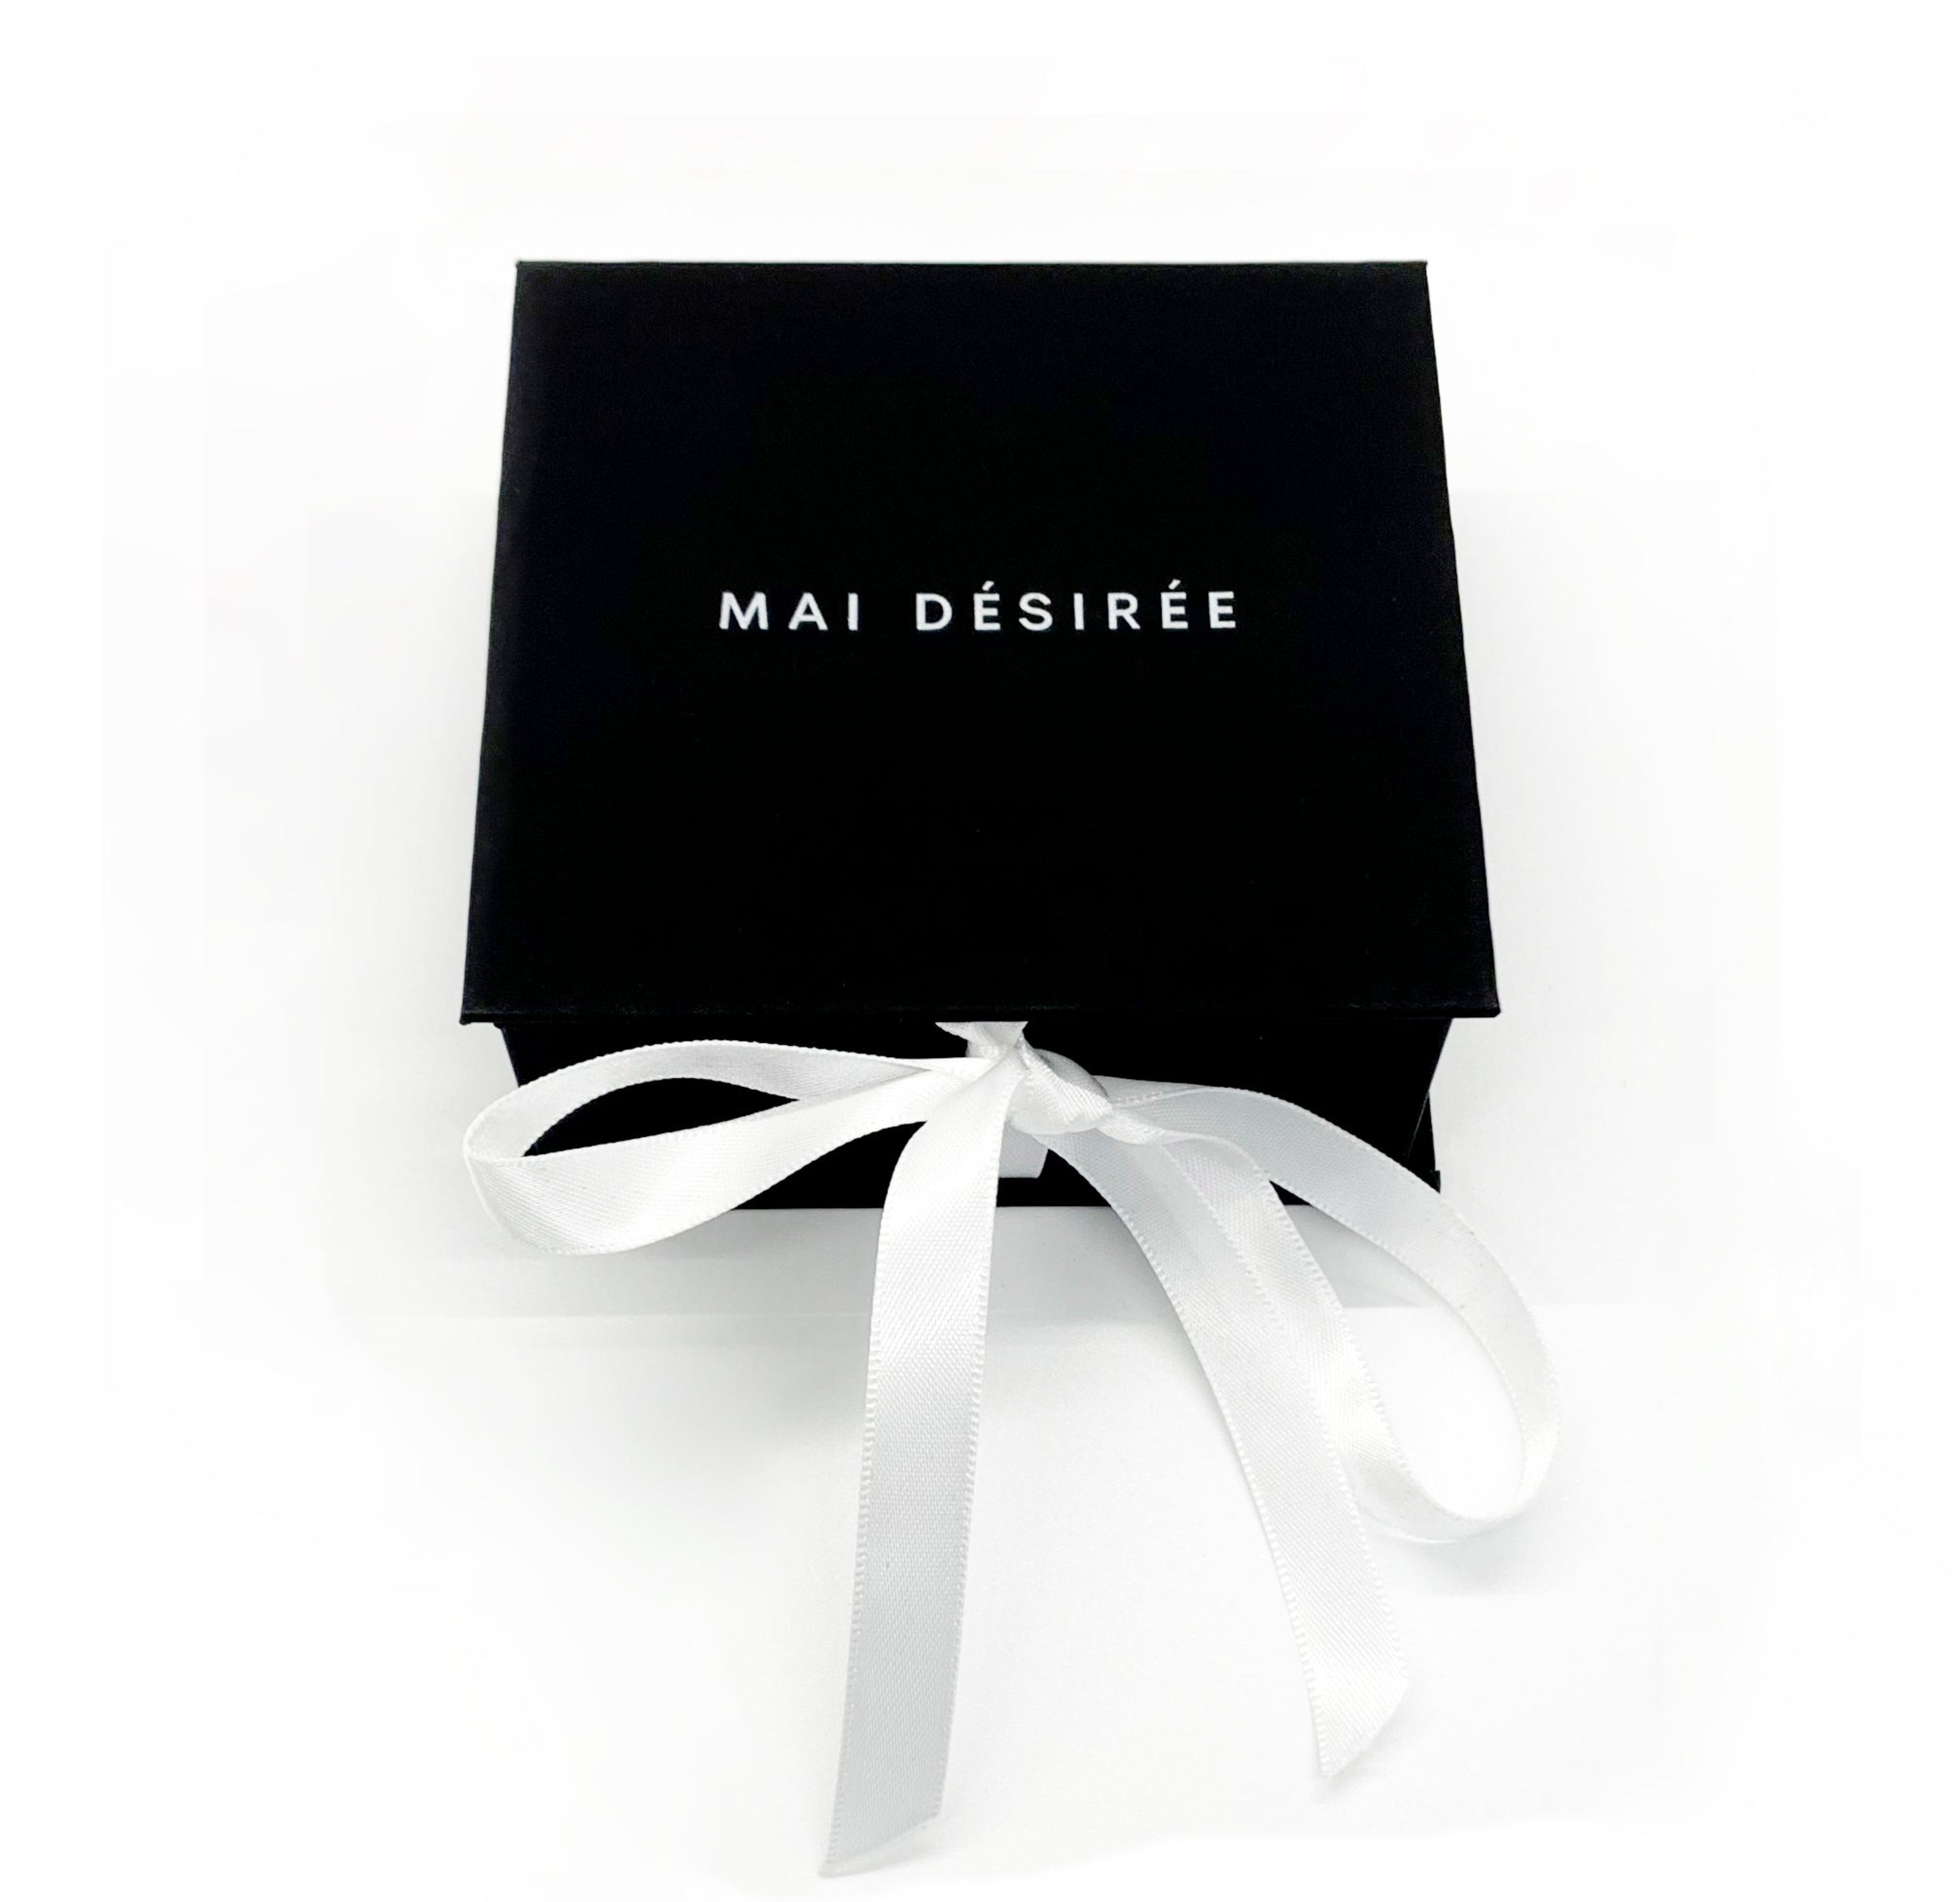 MAI DESIREE black jewelry gift box